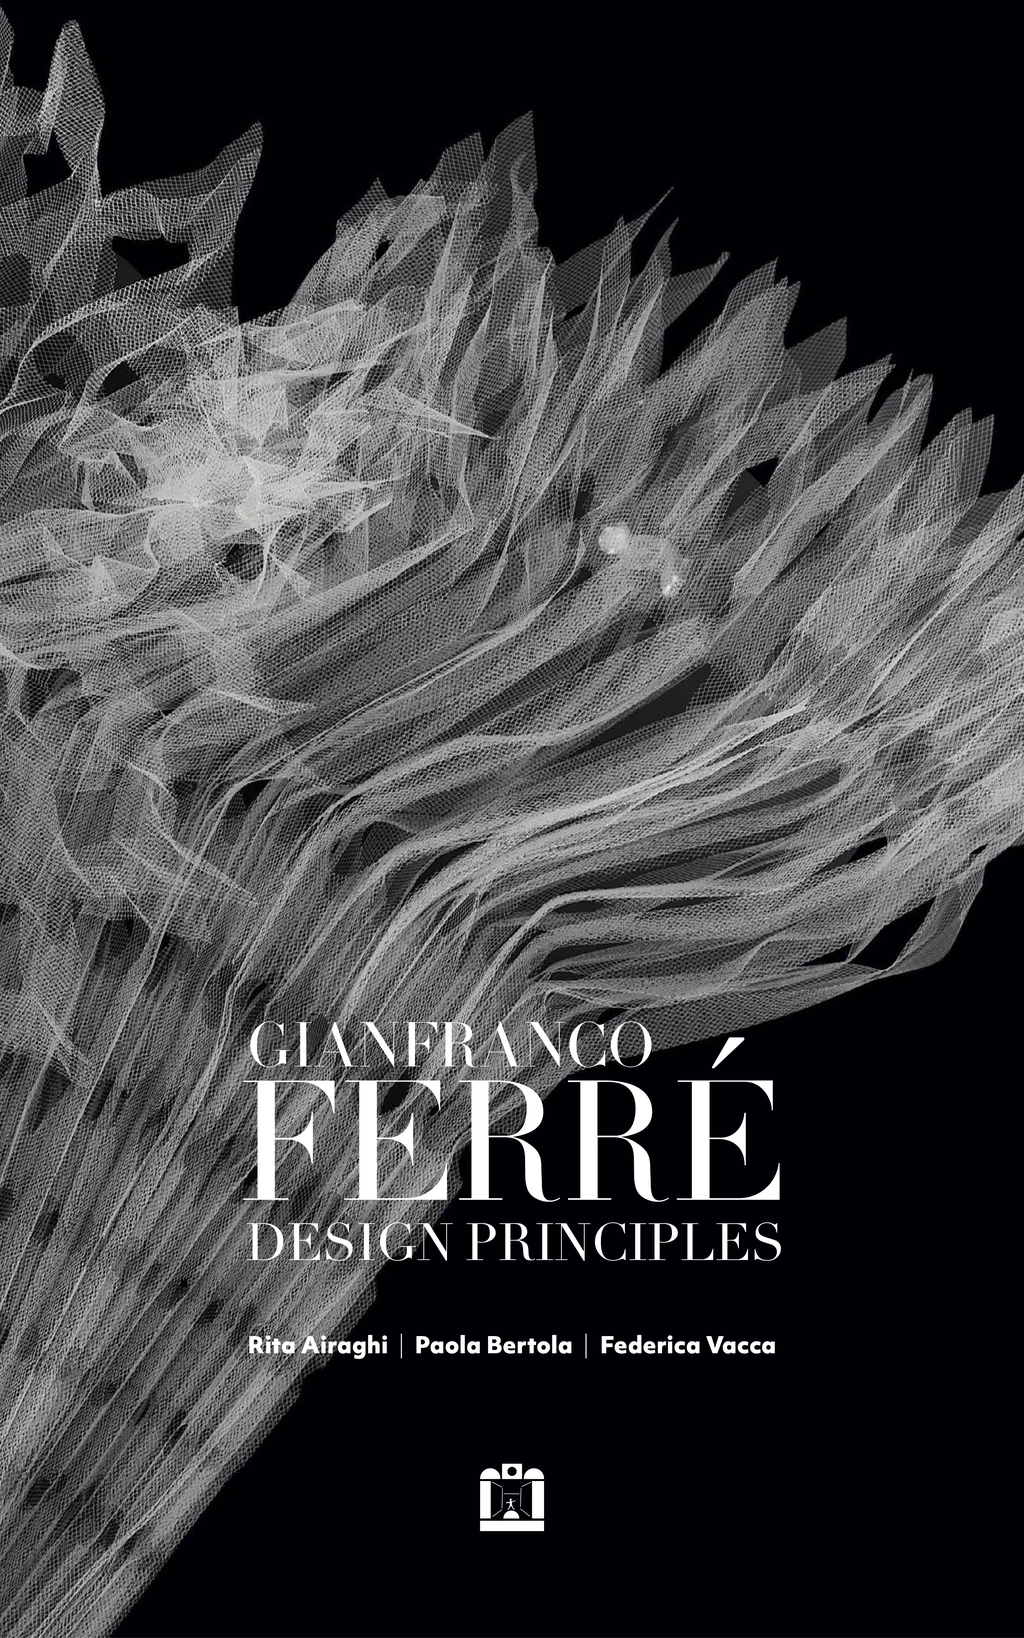 Gianfranco Ferré Design Principles